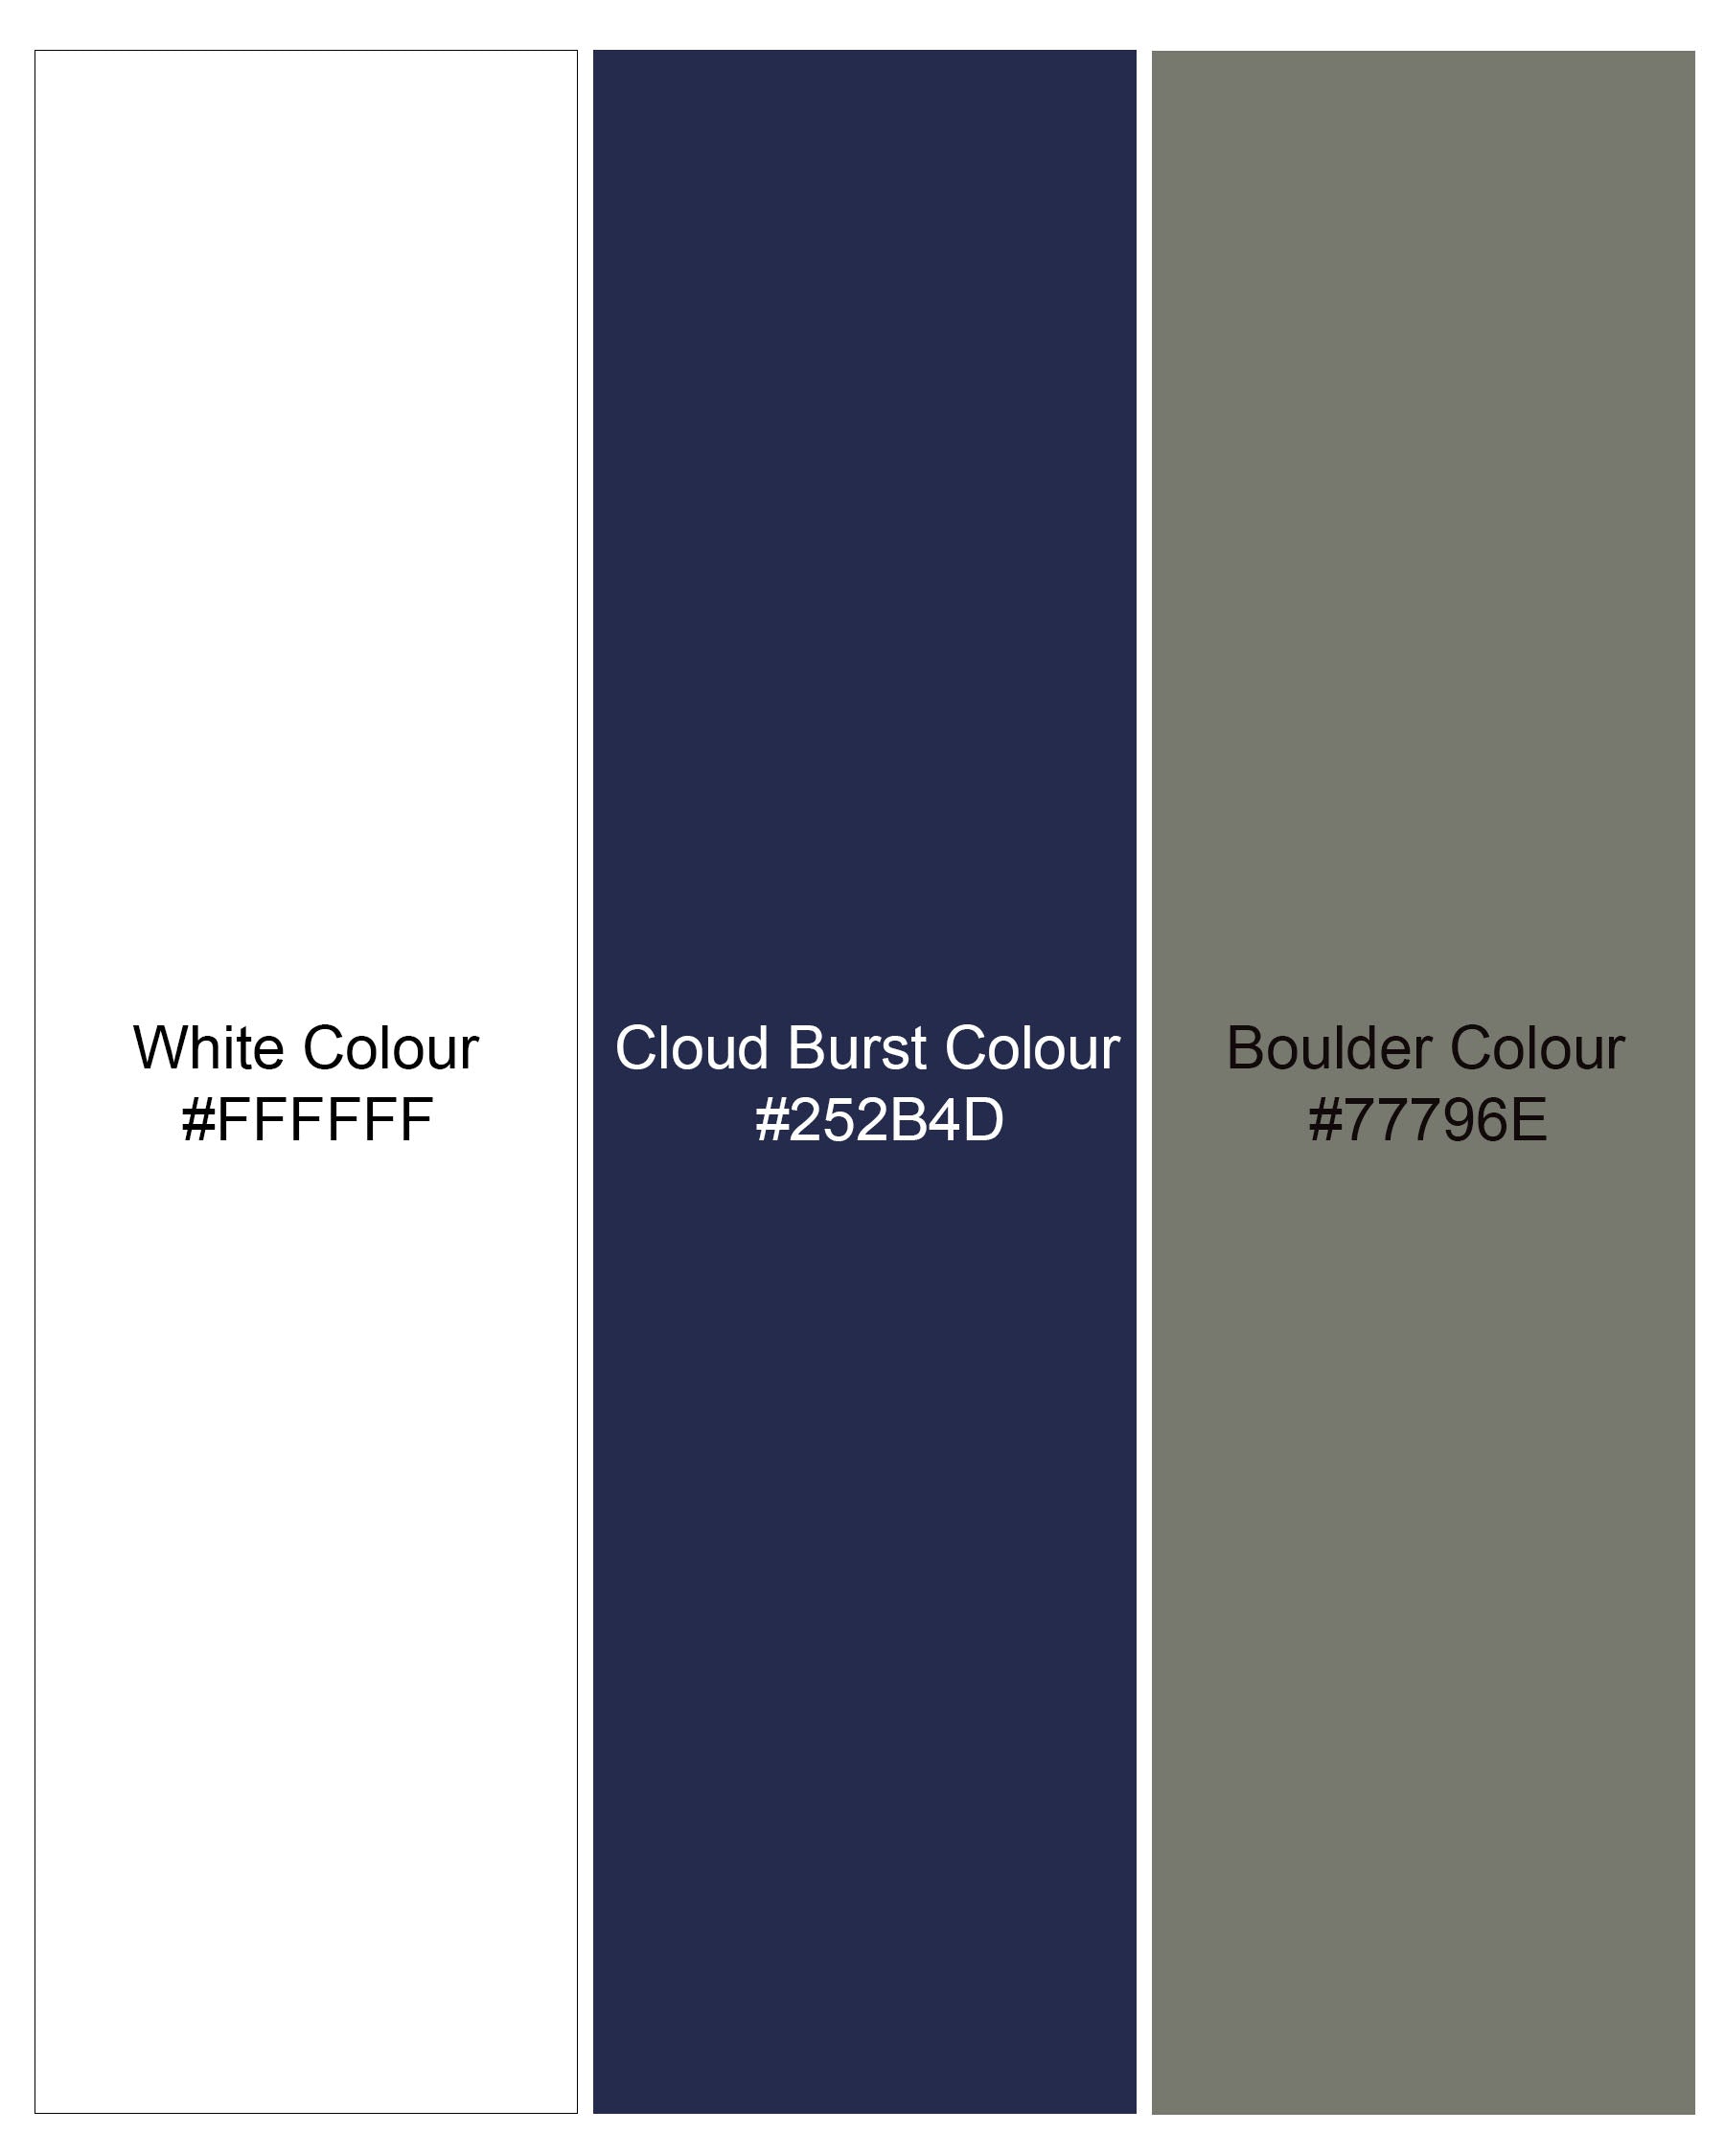 Bright White and Cloud Burst Blue Gingham Premium Cotton Shirt 8220-M-38, 8220-M-H-38, 8220-M-39, 8220-M-H-39, 8220-M-40, 8220-M-H-40, 8220-M-42, 8220-M-H-42, 8220-M-44, 8220-M-H-44, 8220-M-46, 8220-M-H-46, 8220-M-48, 8220-M-H-48, 8220-M-50, 8220-M-H-50, 8220-M-52, 8220-M-H-52